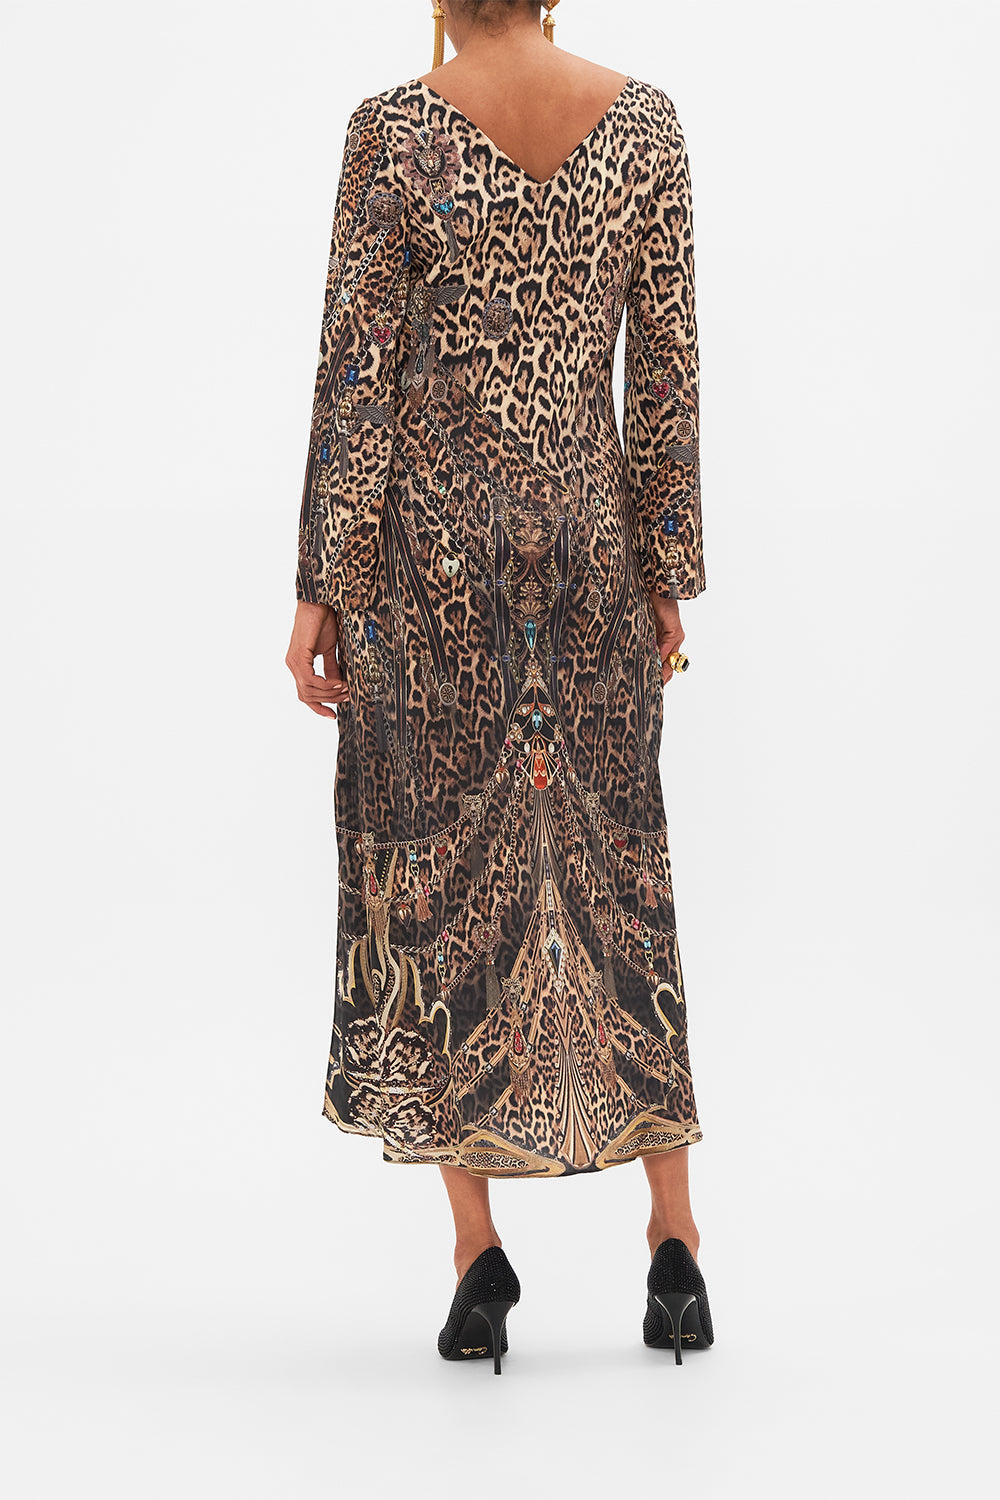 CAMILLA Leopard Long Sleeve Bias Dress in Amsterglam print